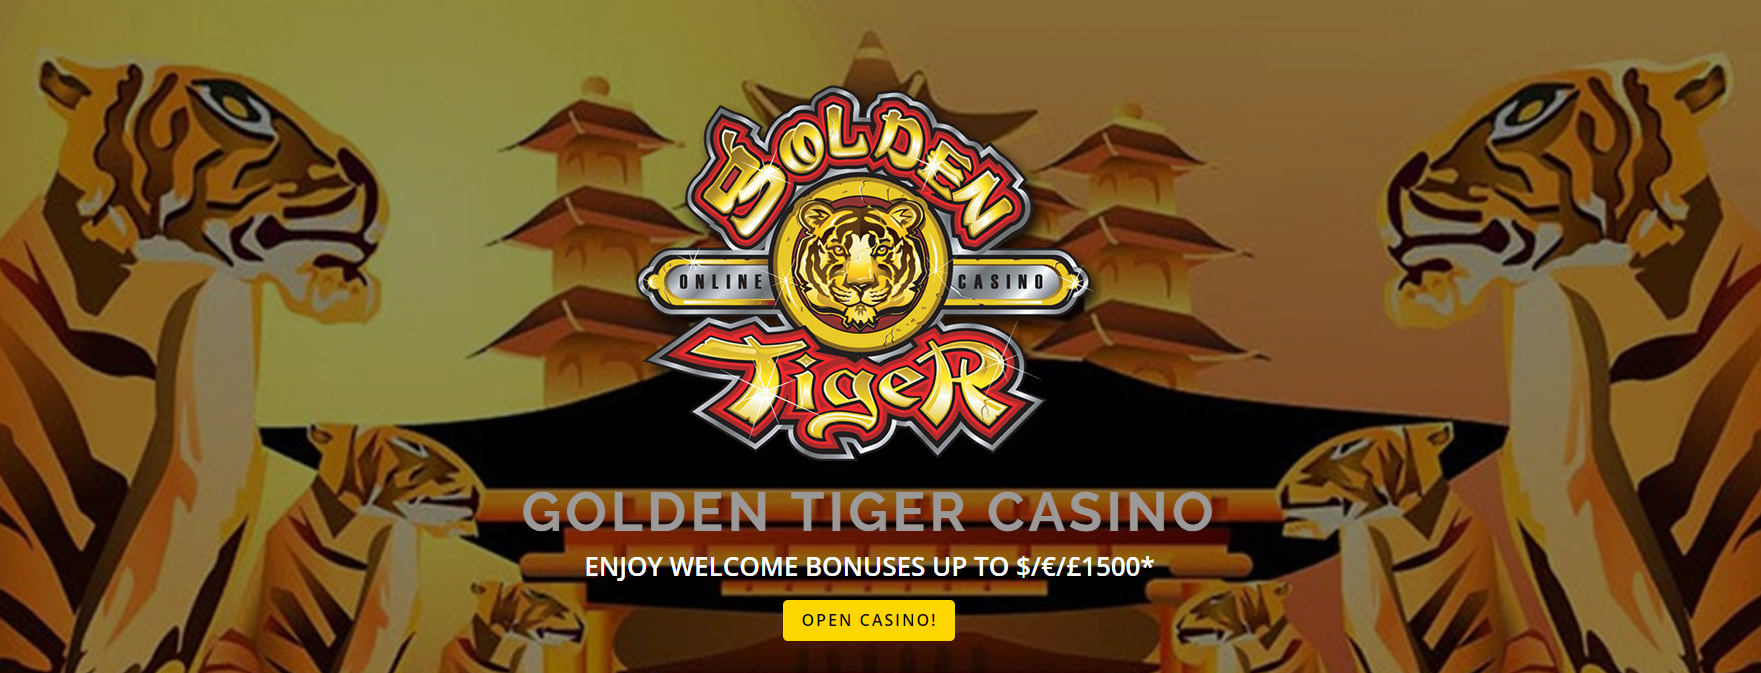 Tiger casino